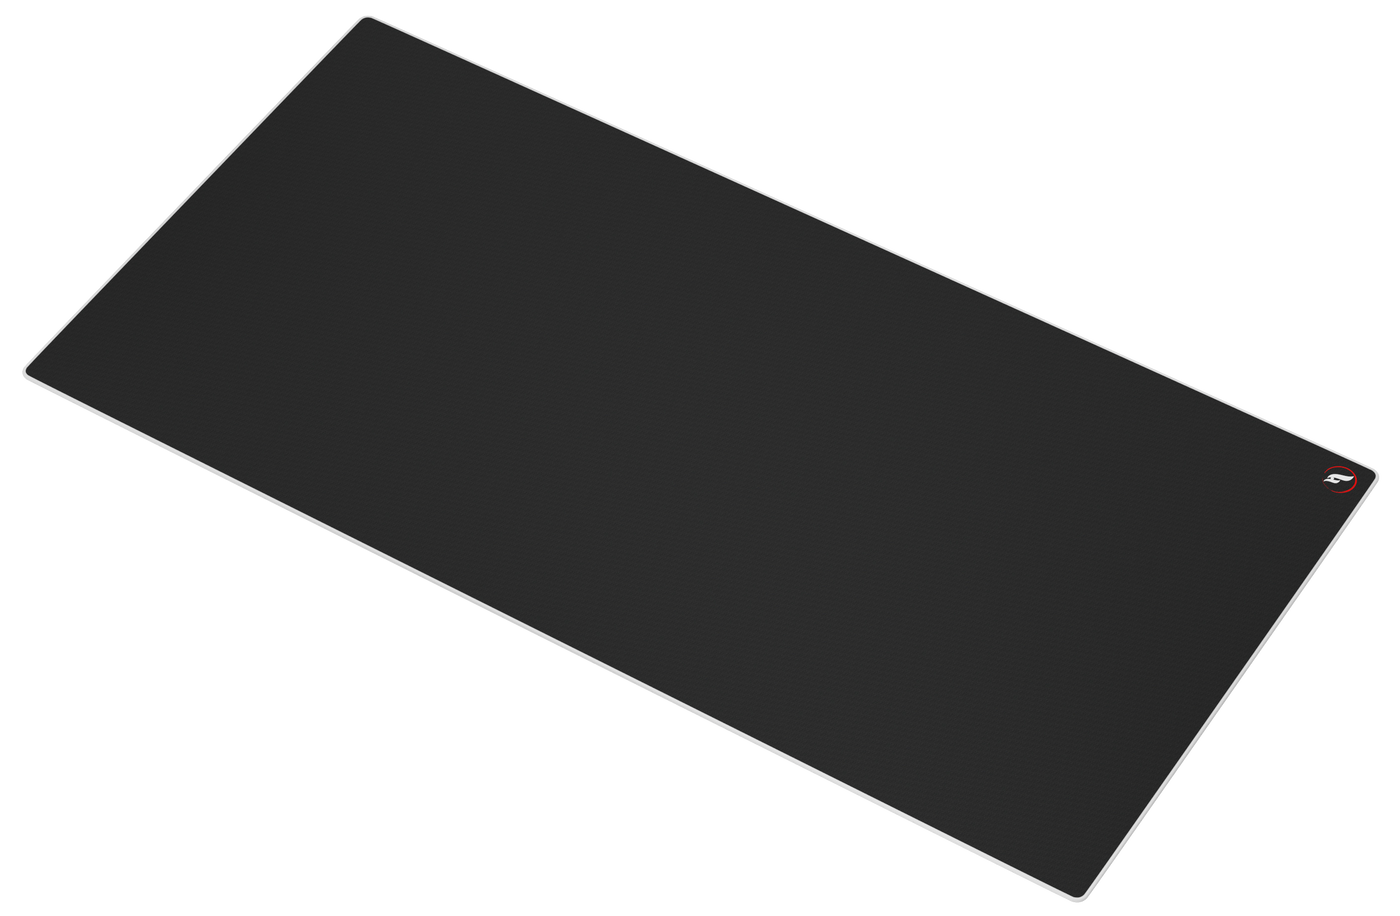 ZeroGravity 3XL mouse pad Black White Edge Angle Odin Gaming